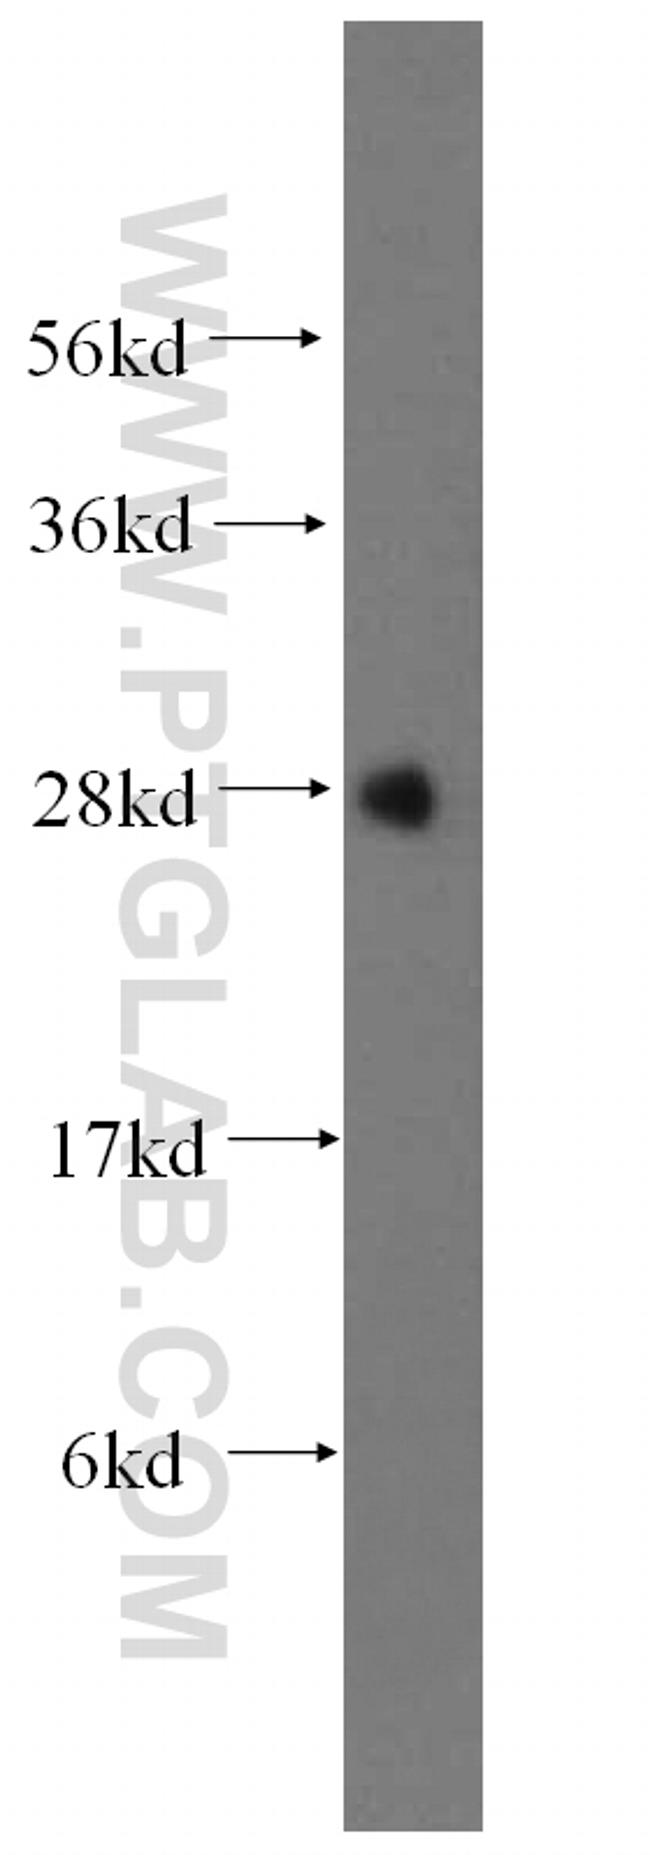 METTL7B Antibody in Western Blot (WB)